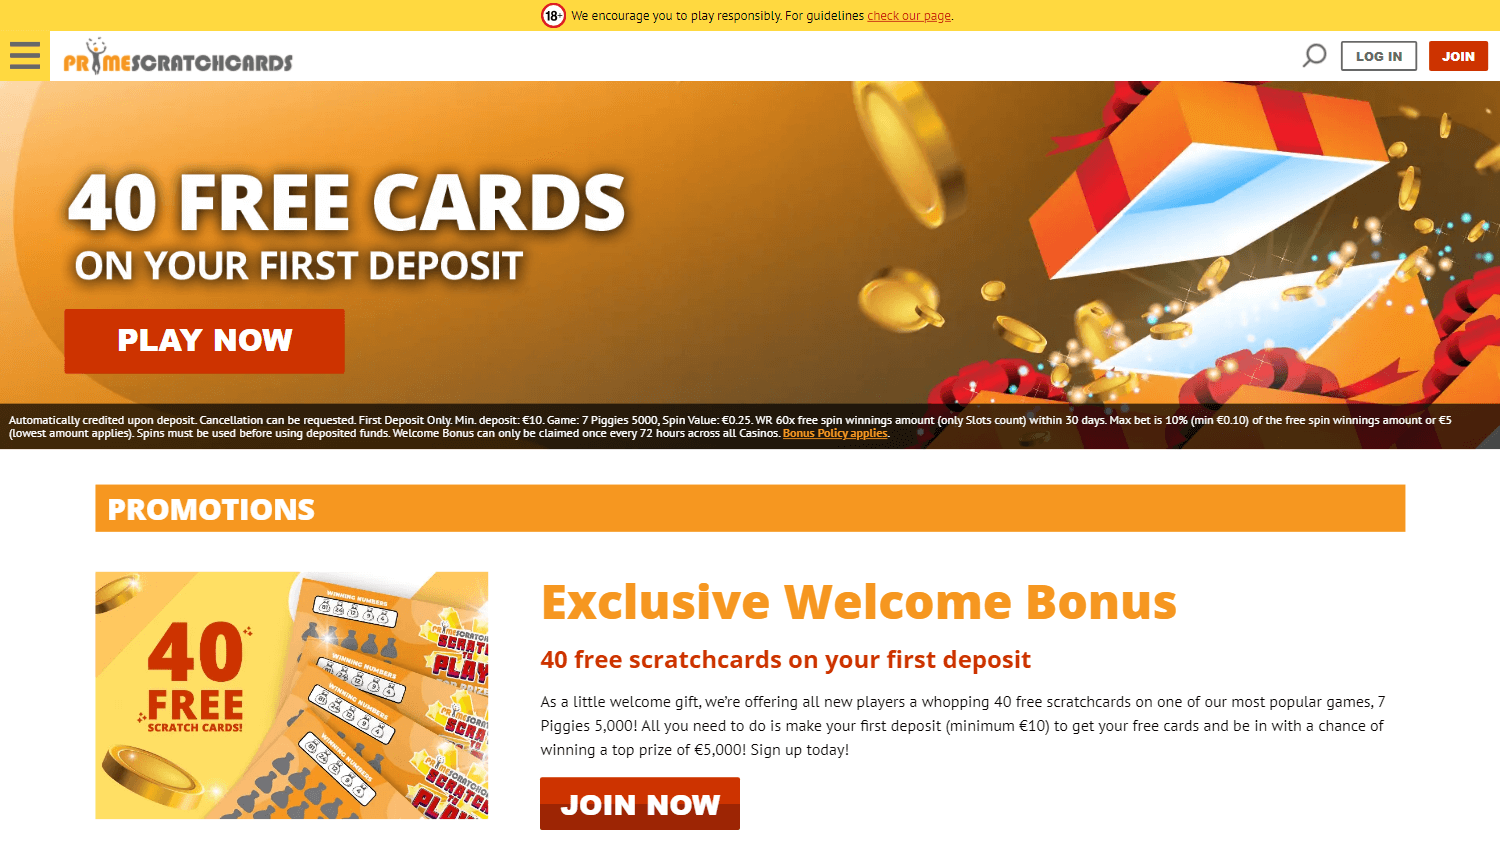 primescratchcards_casino_promotions_desktop